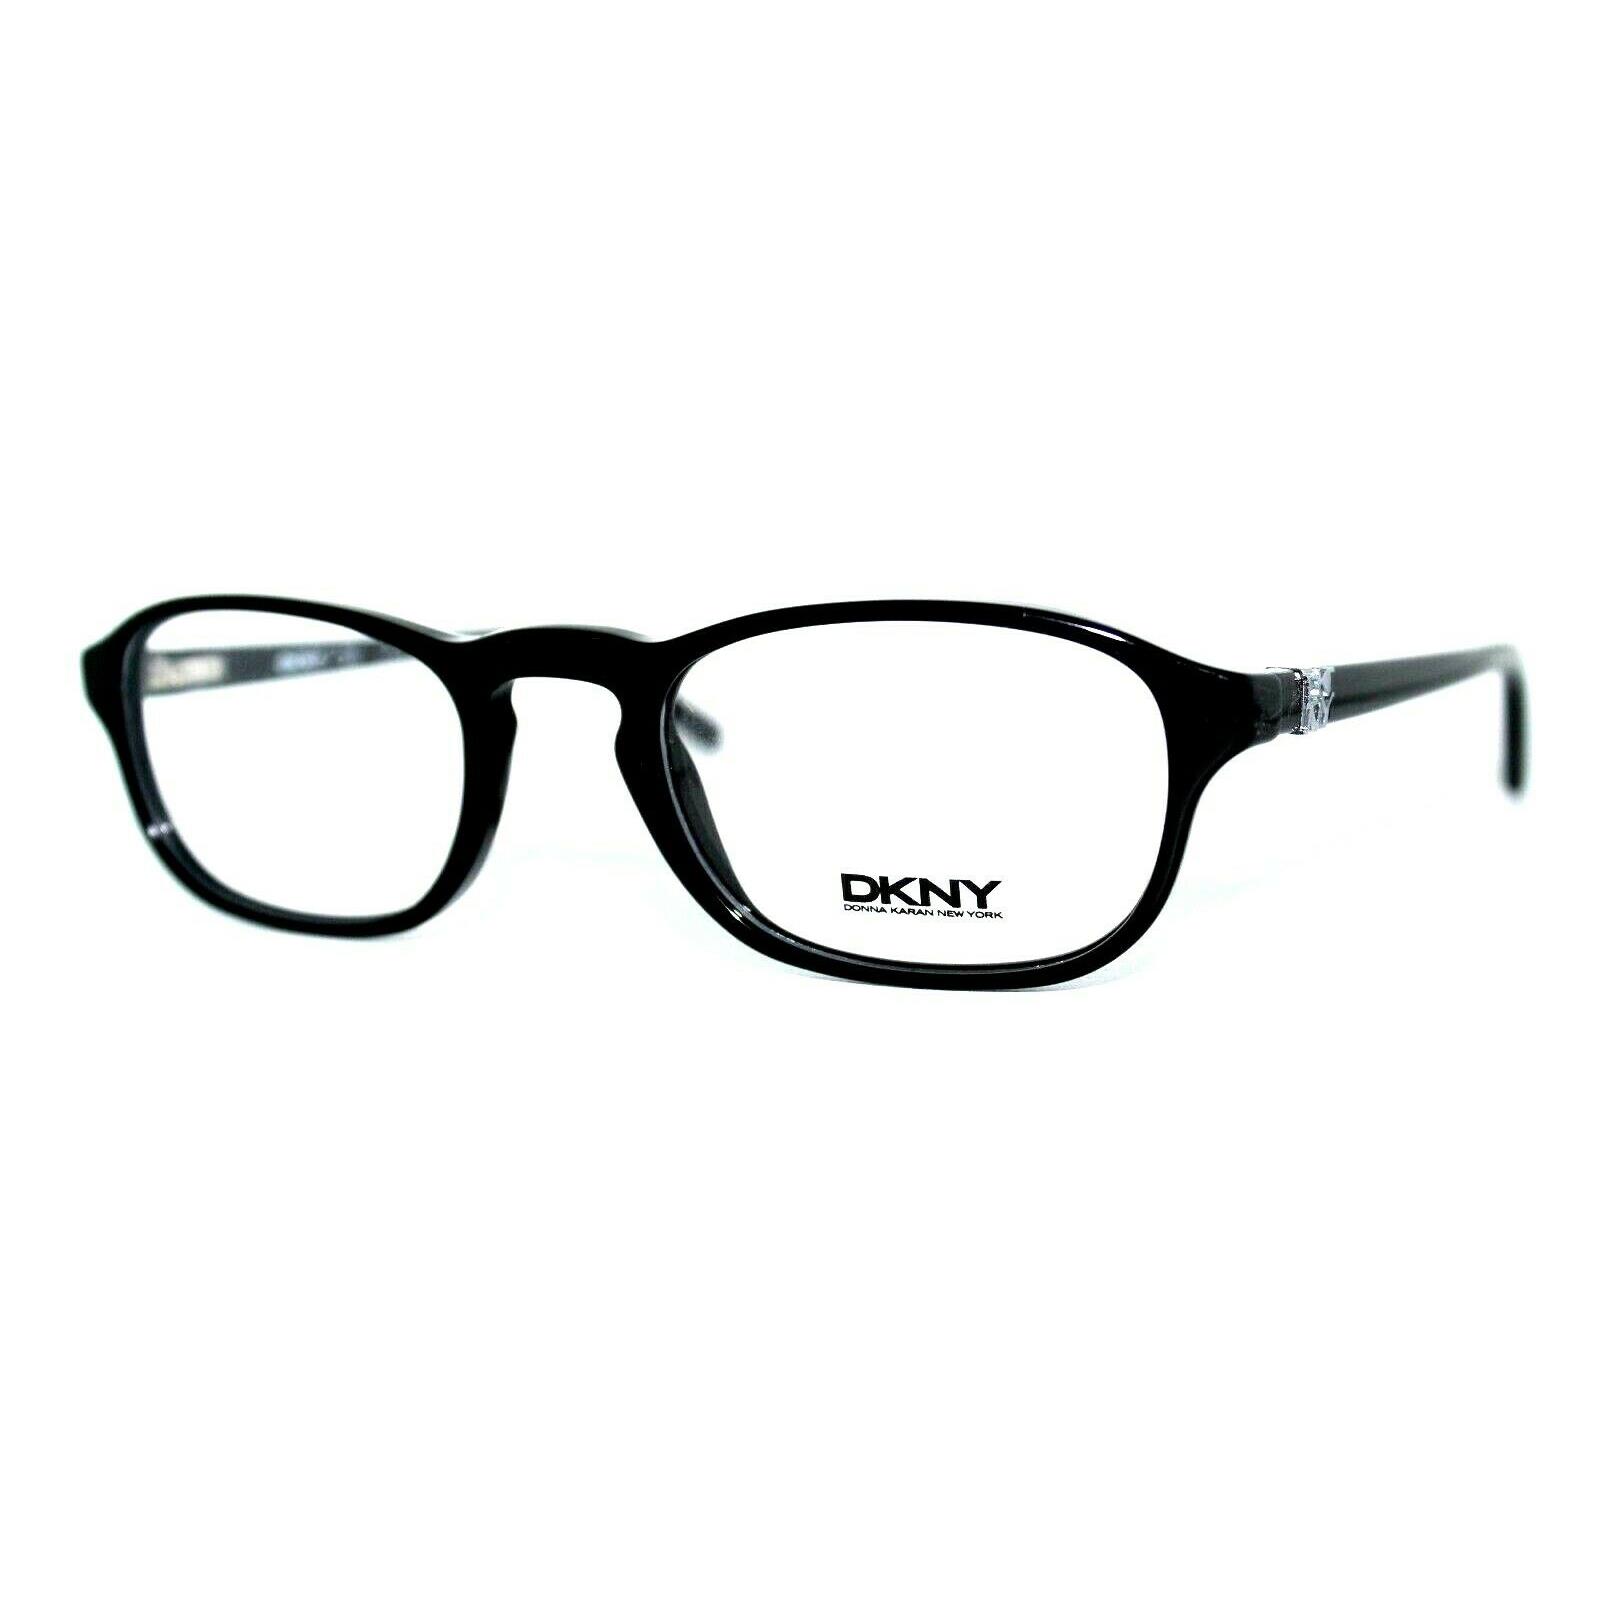 Dkny DY 4632 3001 Black Eyeglasses Donna Karan Frames 50MM RX